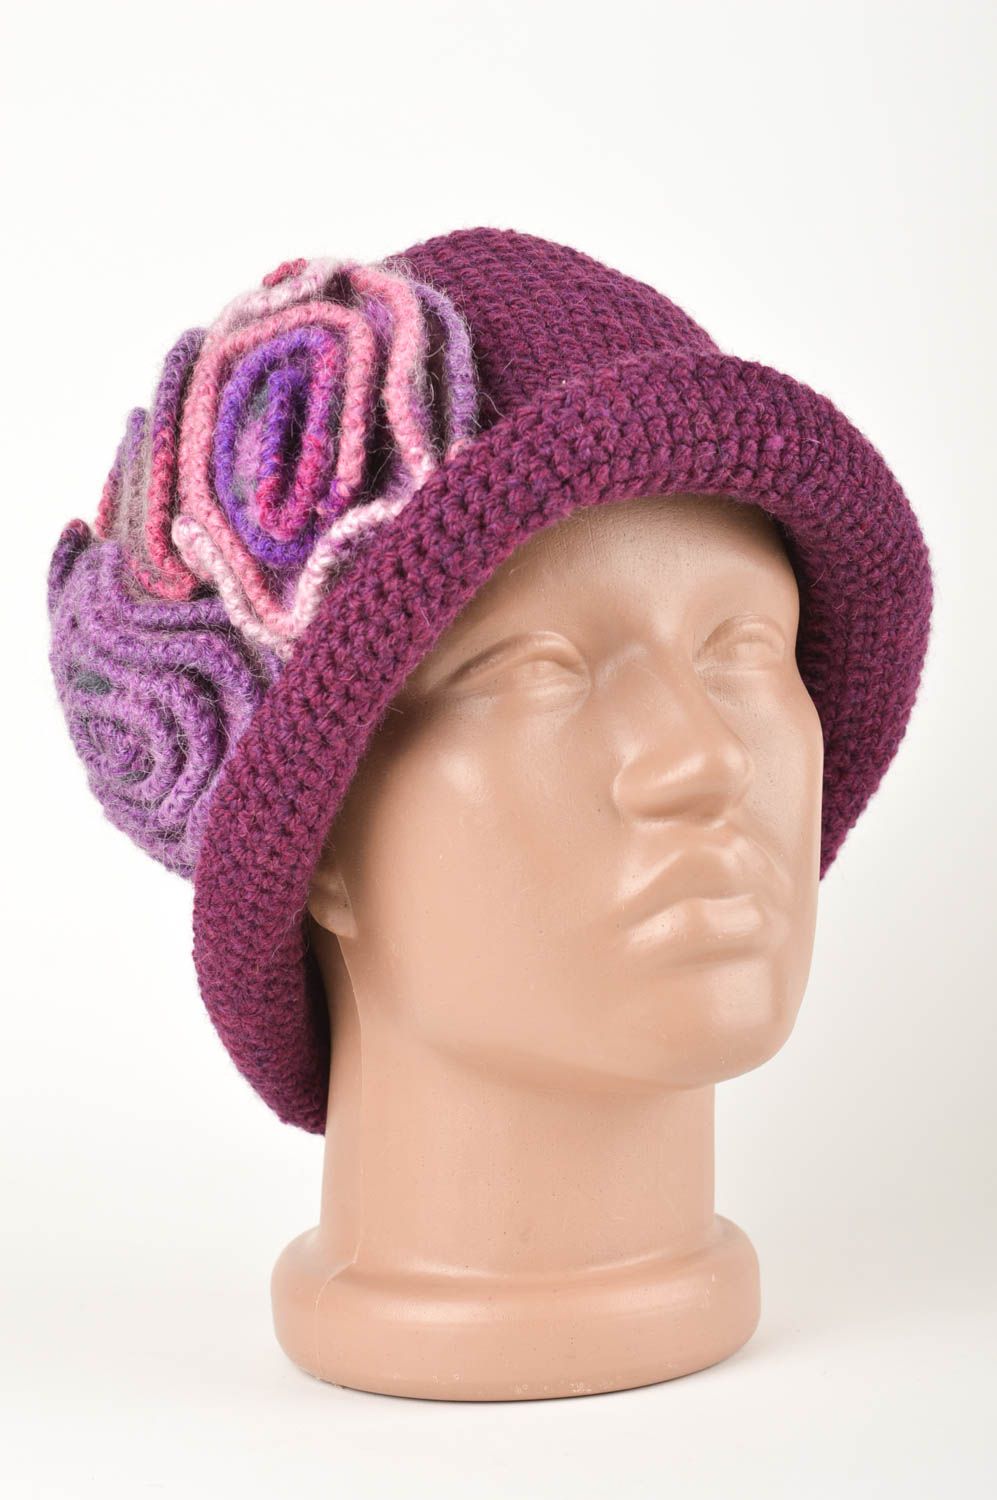 Crochet hat handmade ladies hat womens hat crochet accessories gifts for her photo 1